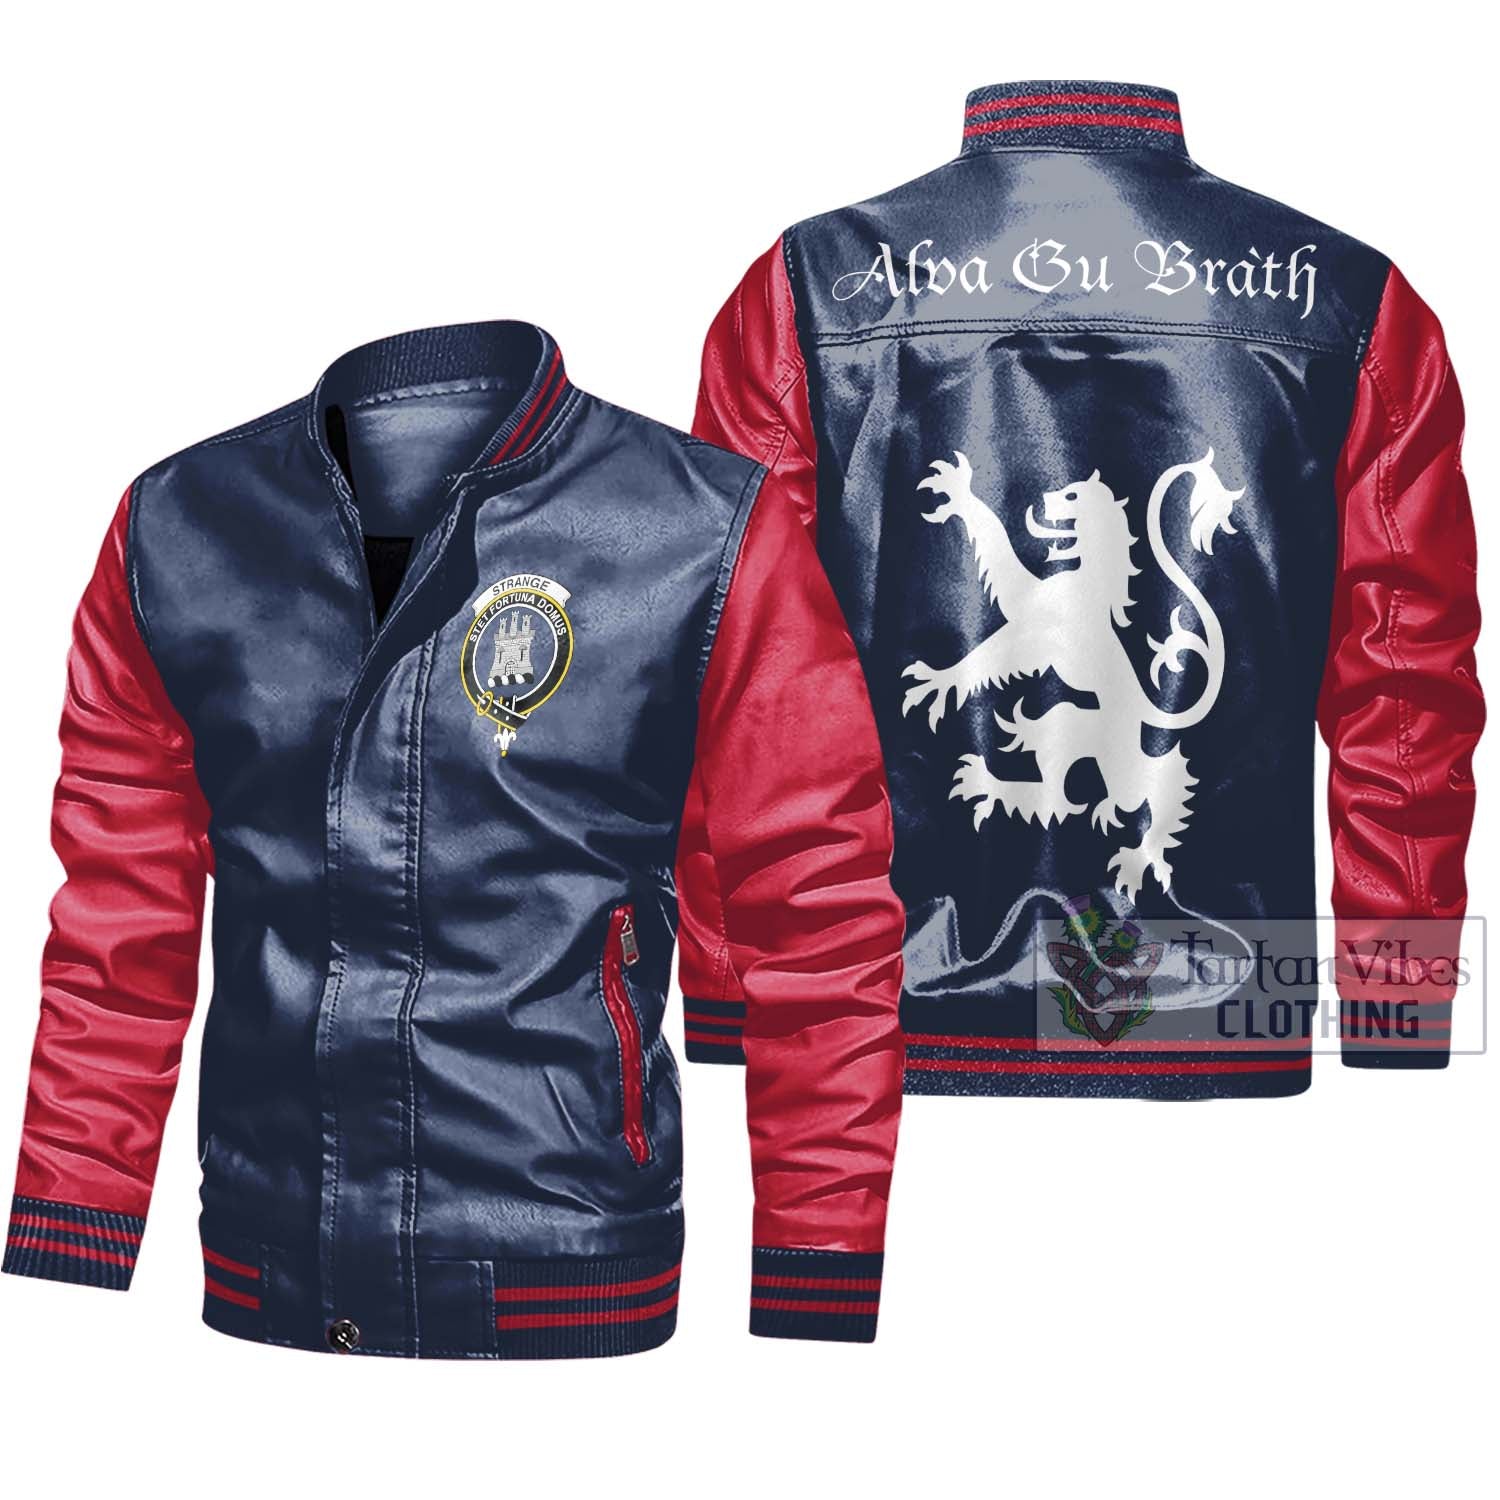 Tartan Vibes Clothing Strange Family Crest Leather Bomber Jacket Lion Rampant Alba Gu Brath Style